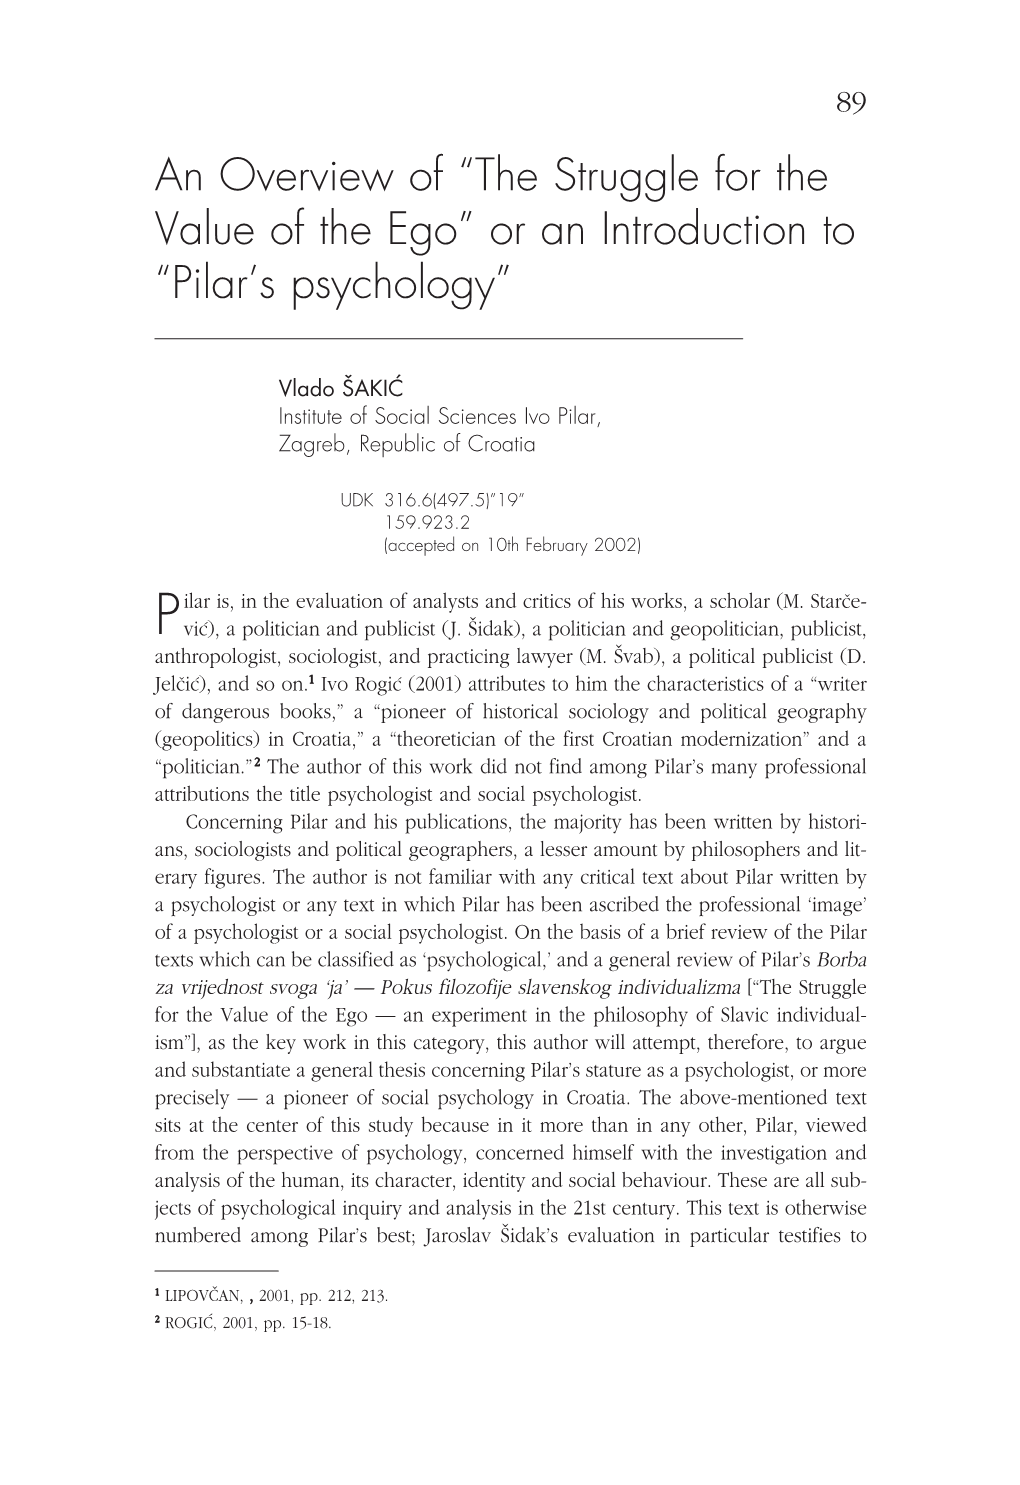 Pilar's Psychology